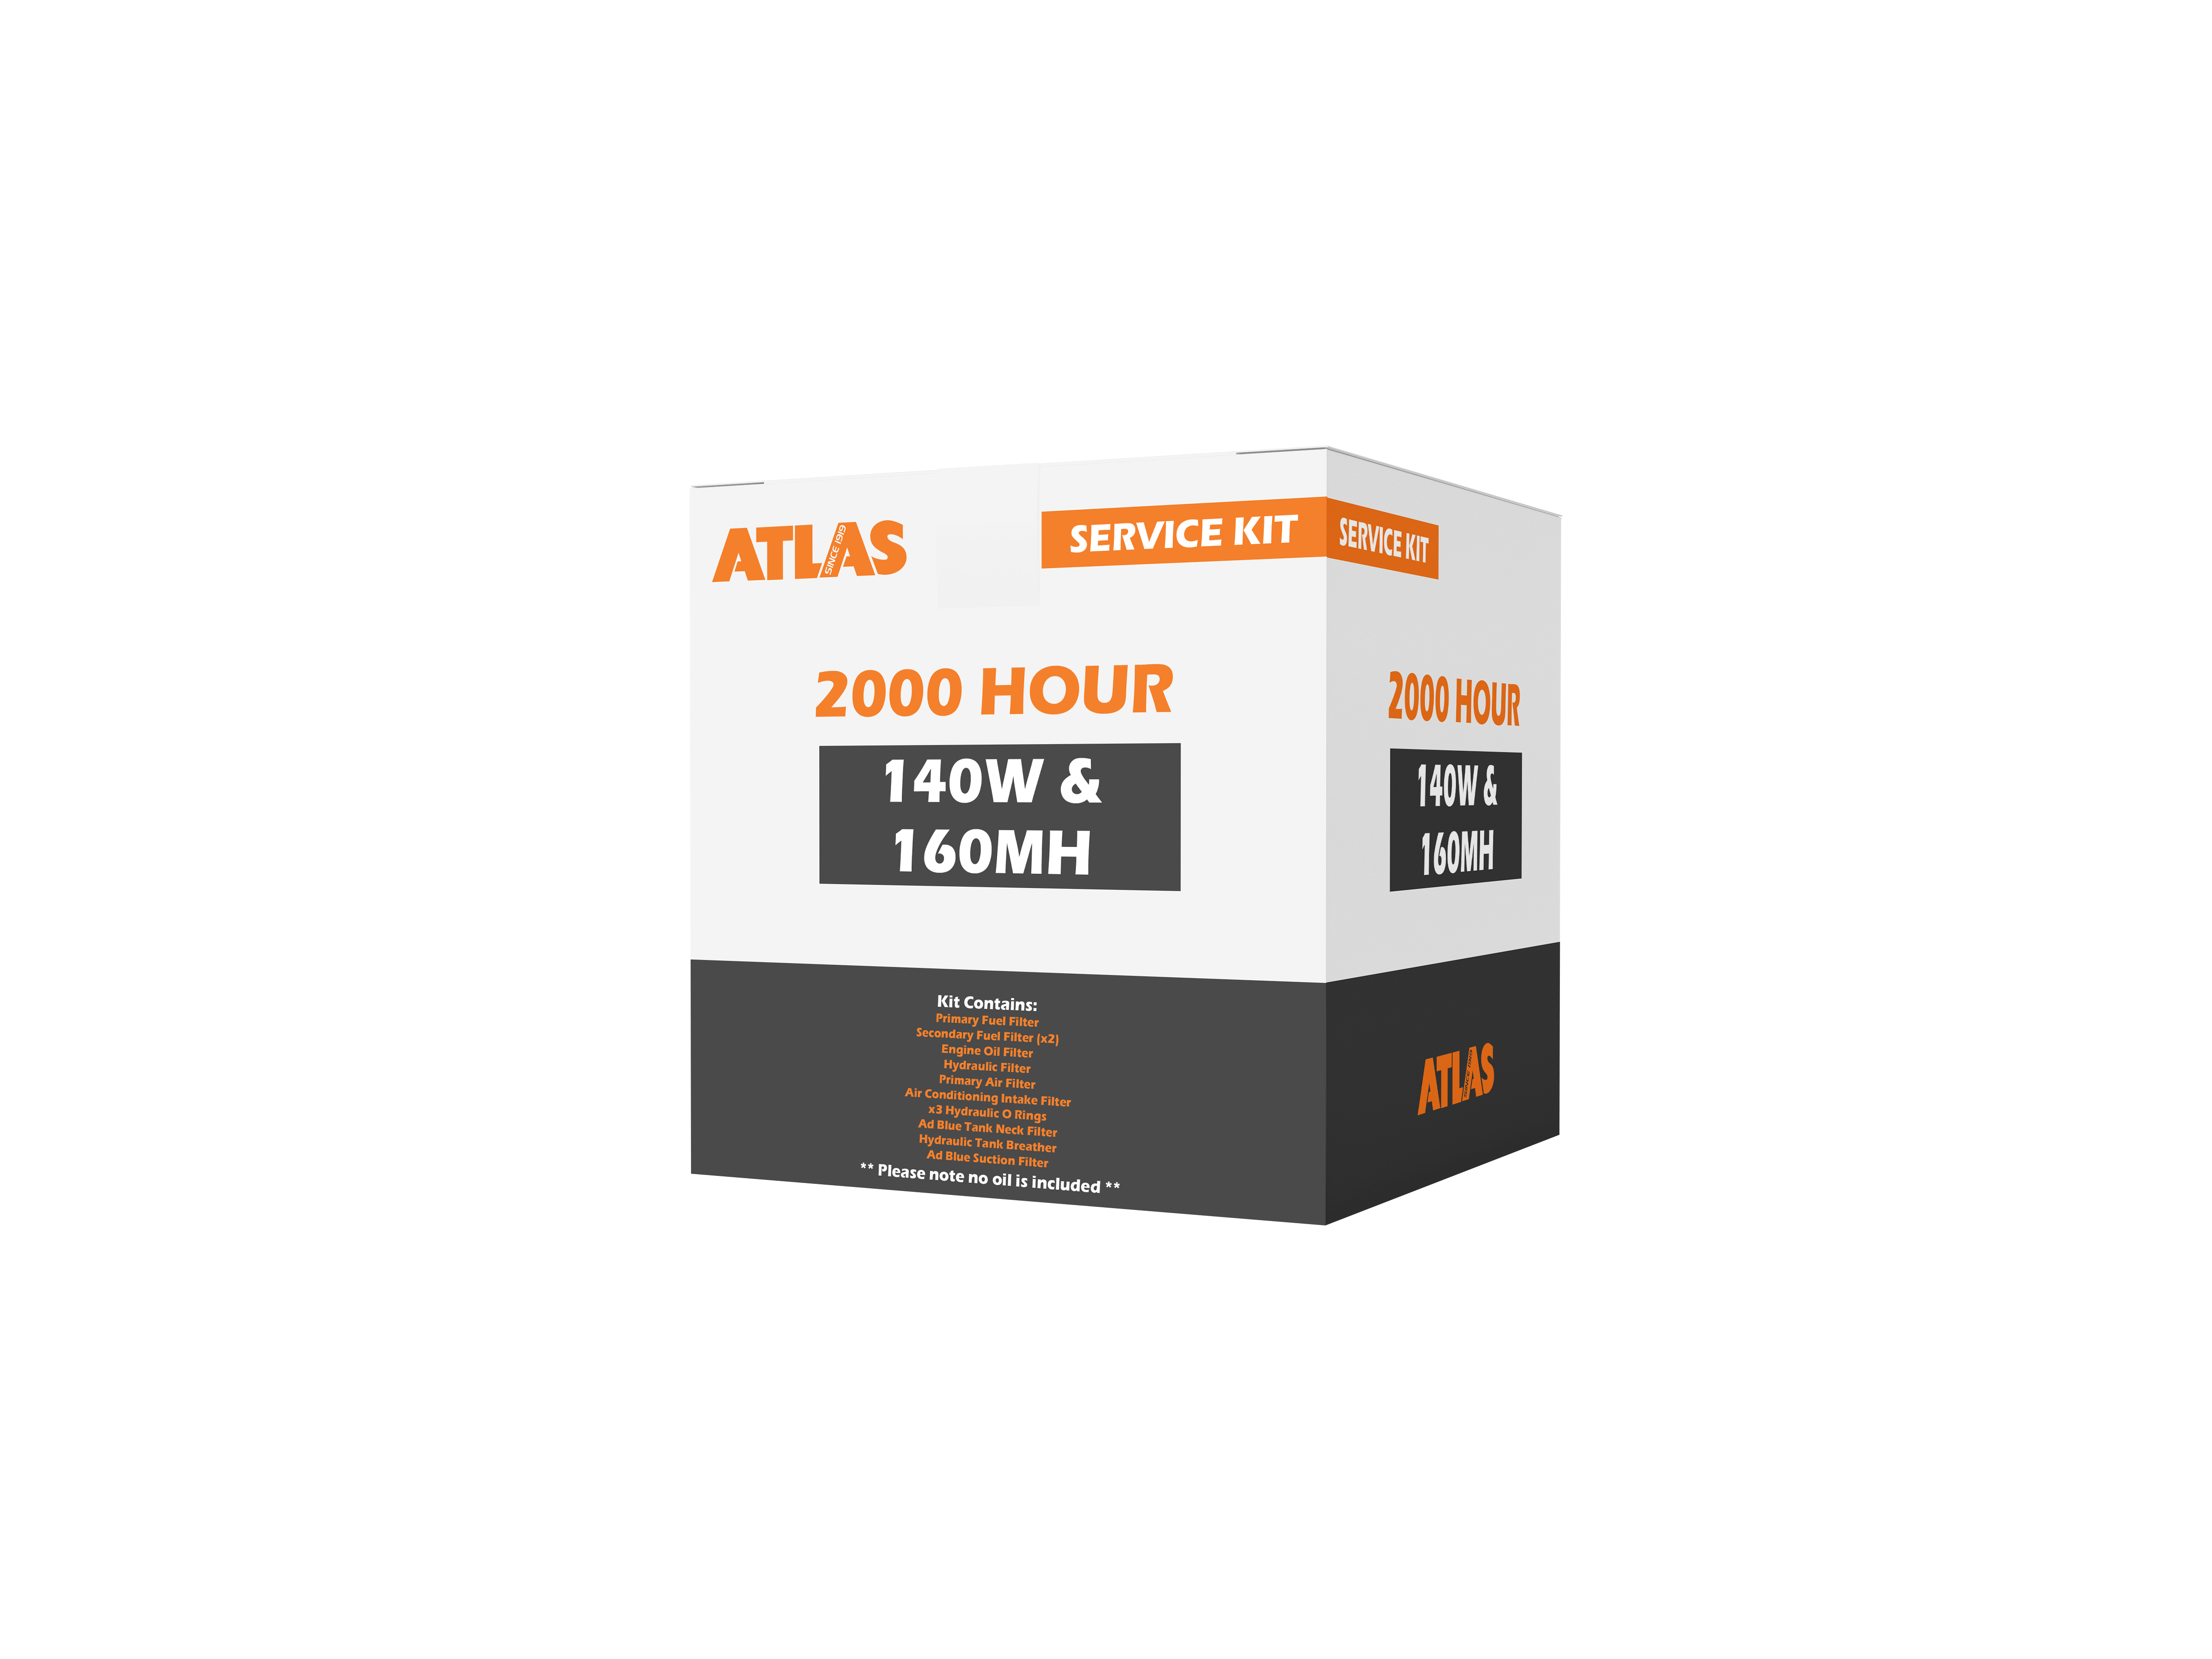 Atlas 140W & 160MH 2000 Hour Service Kit